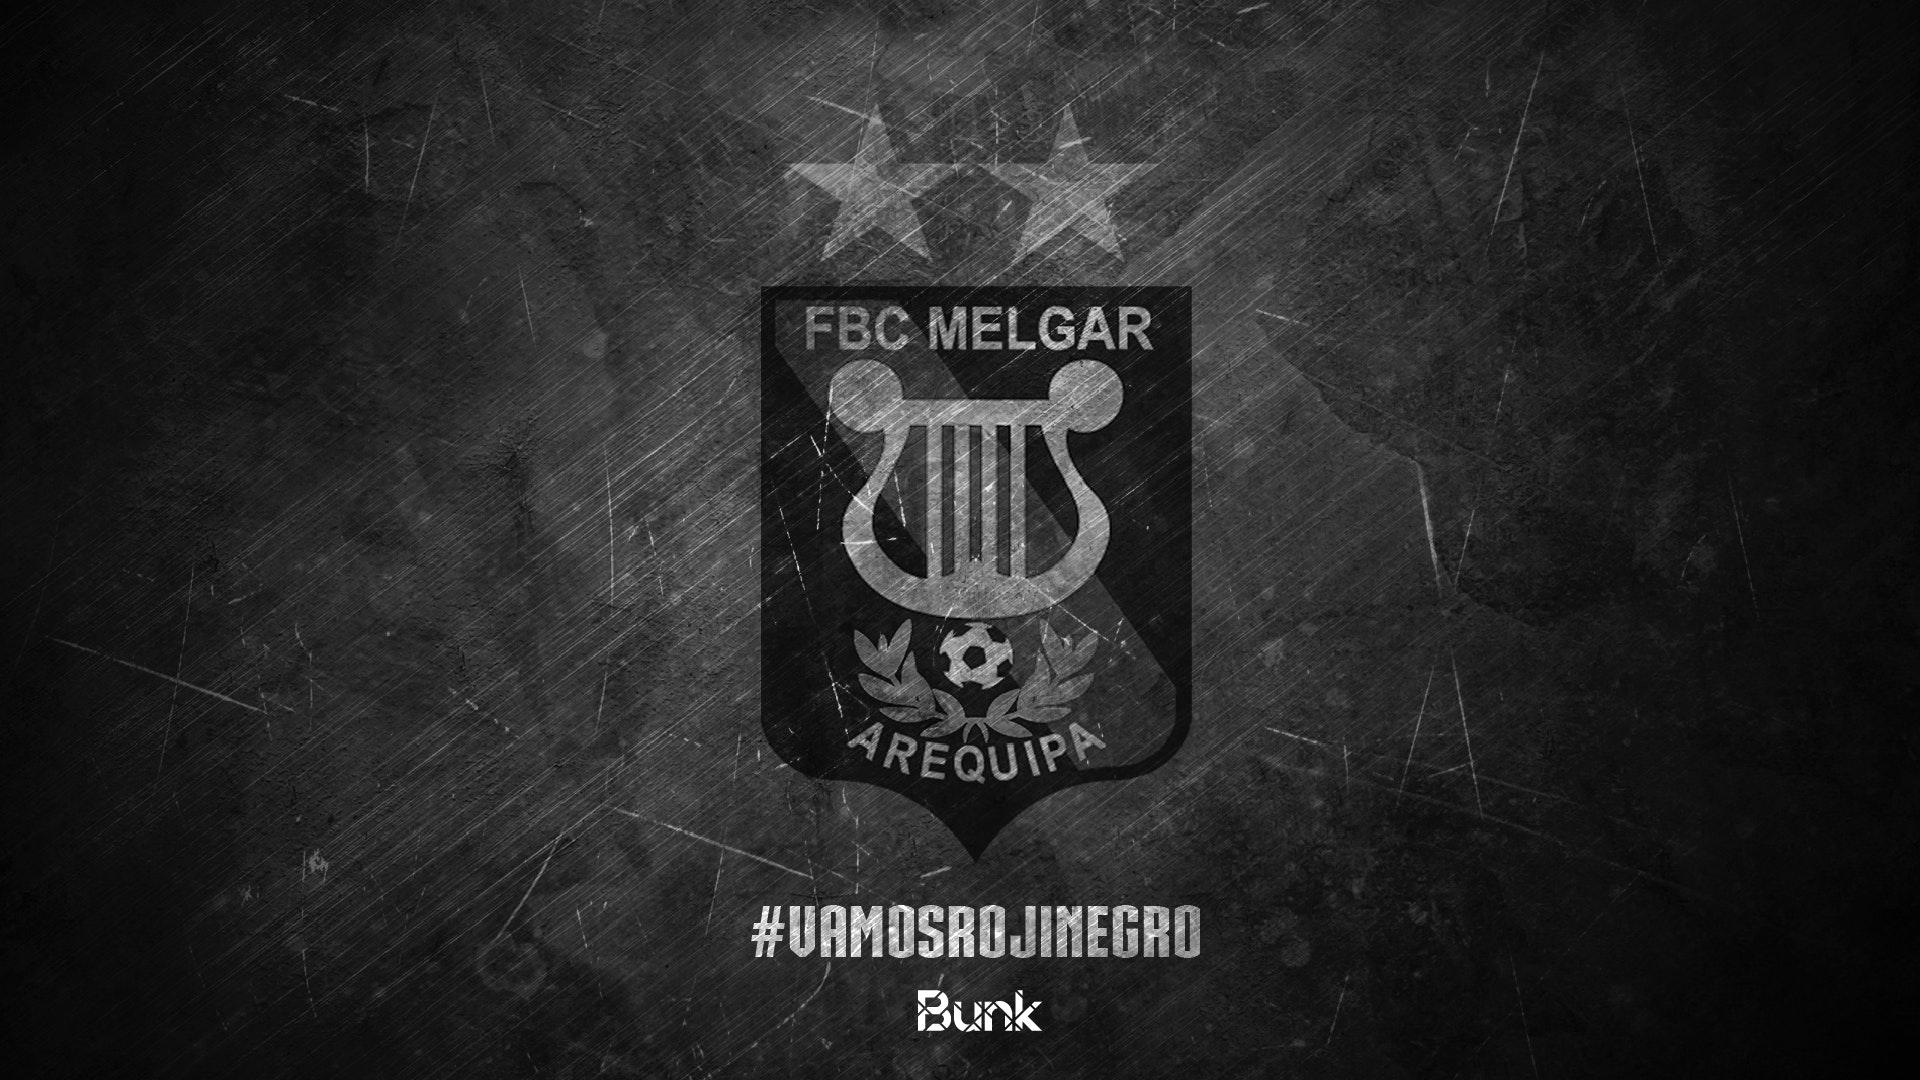 Free of futbol, Melgar, peru